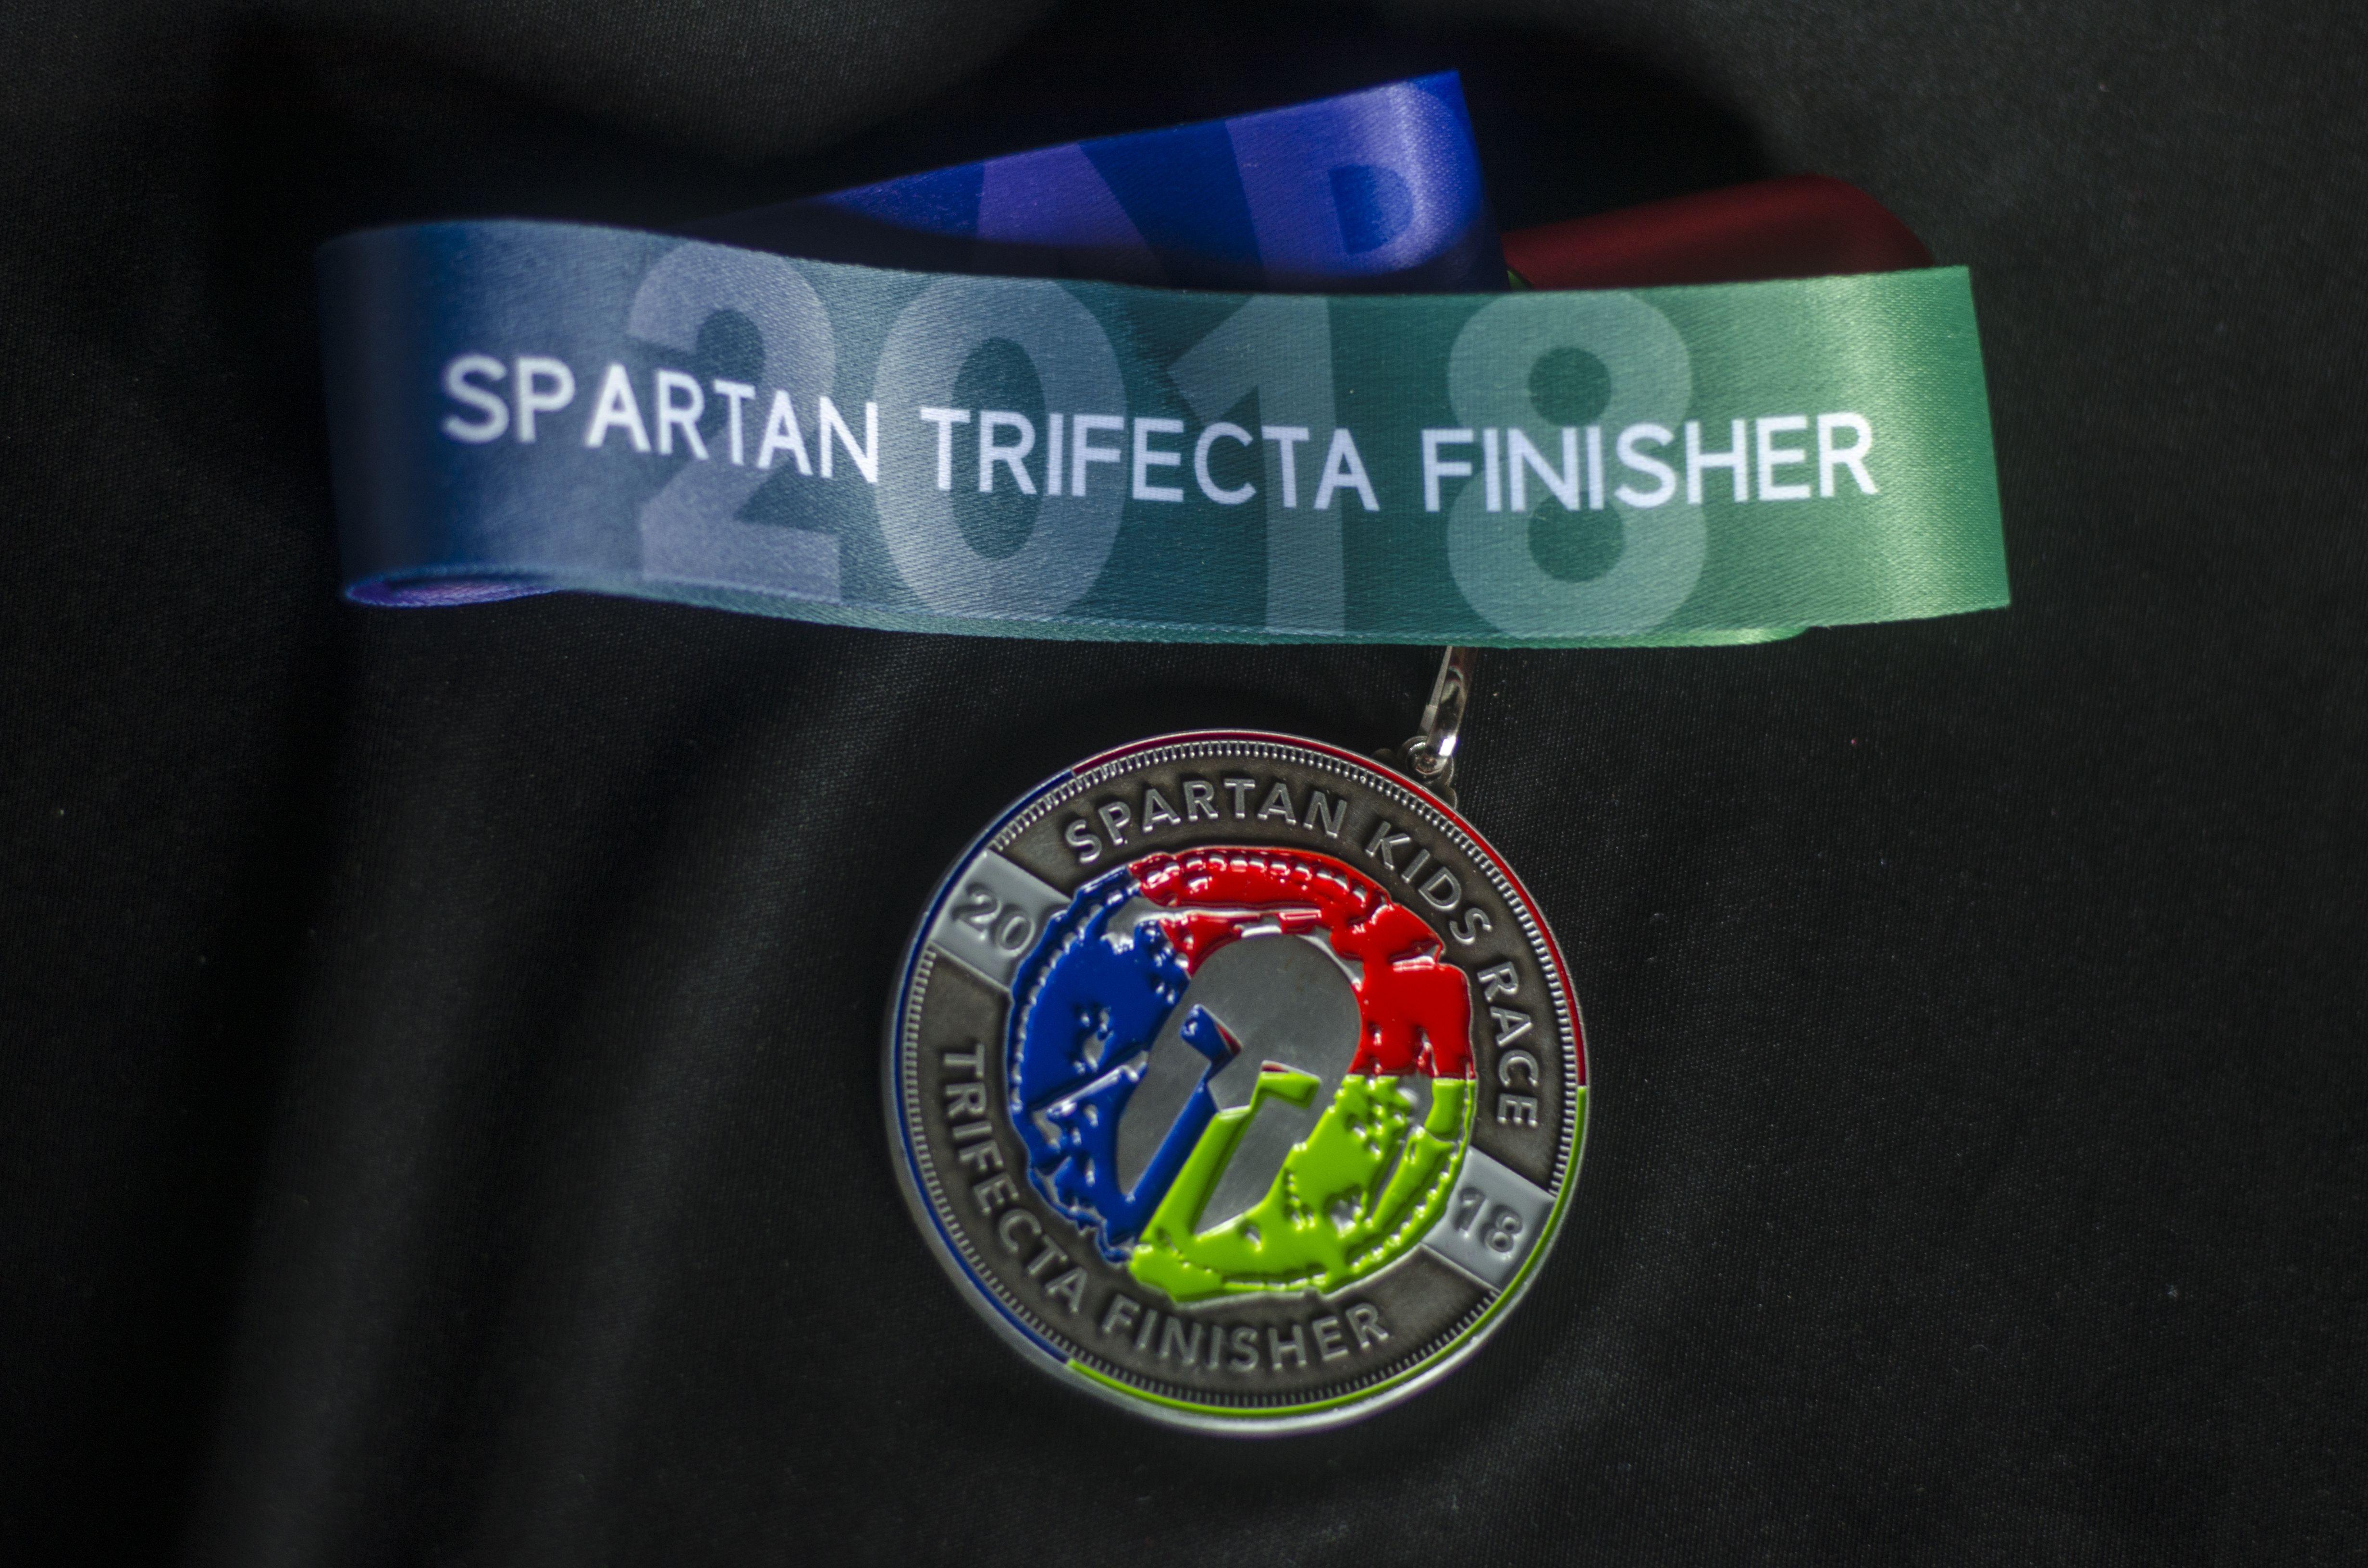 Spartan Trifecta Logo - Spartan Race Inc. Obstacle Course Races. KIDS RACE. Special